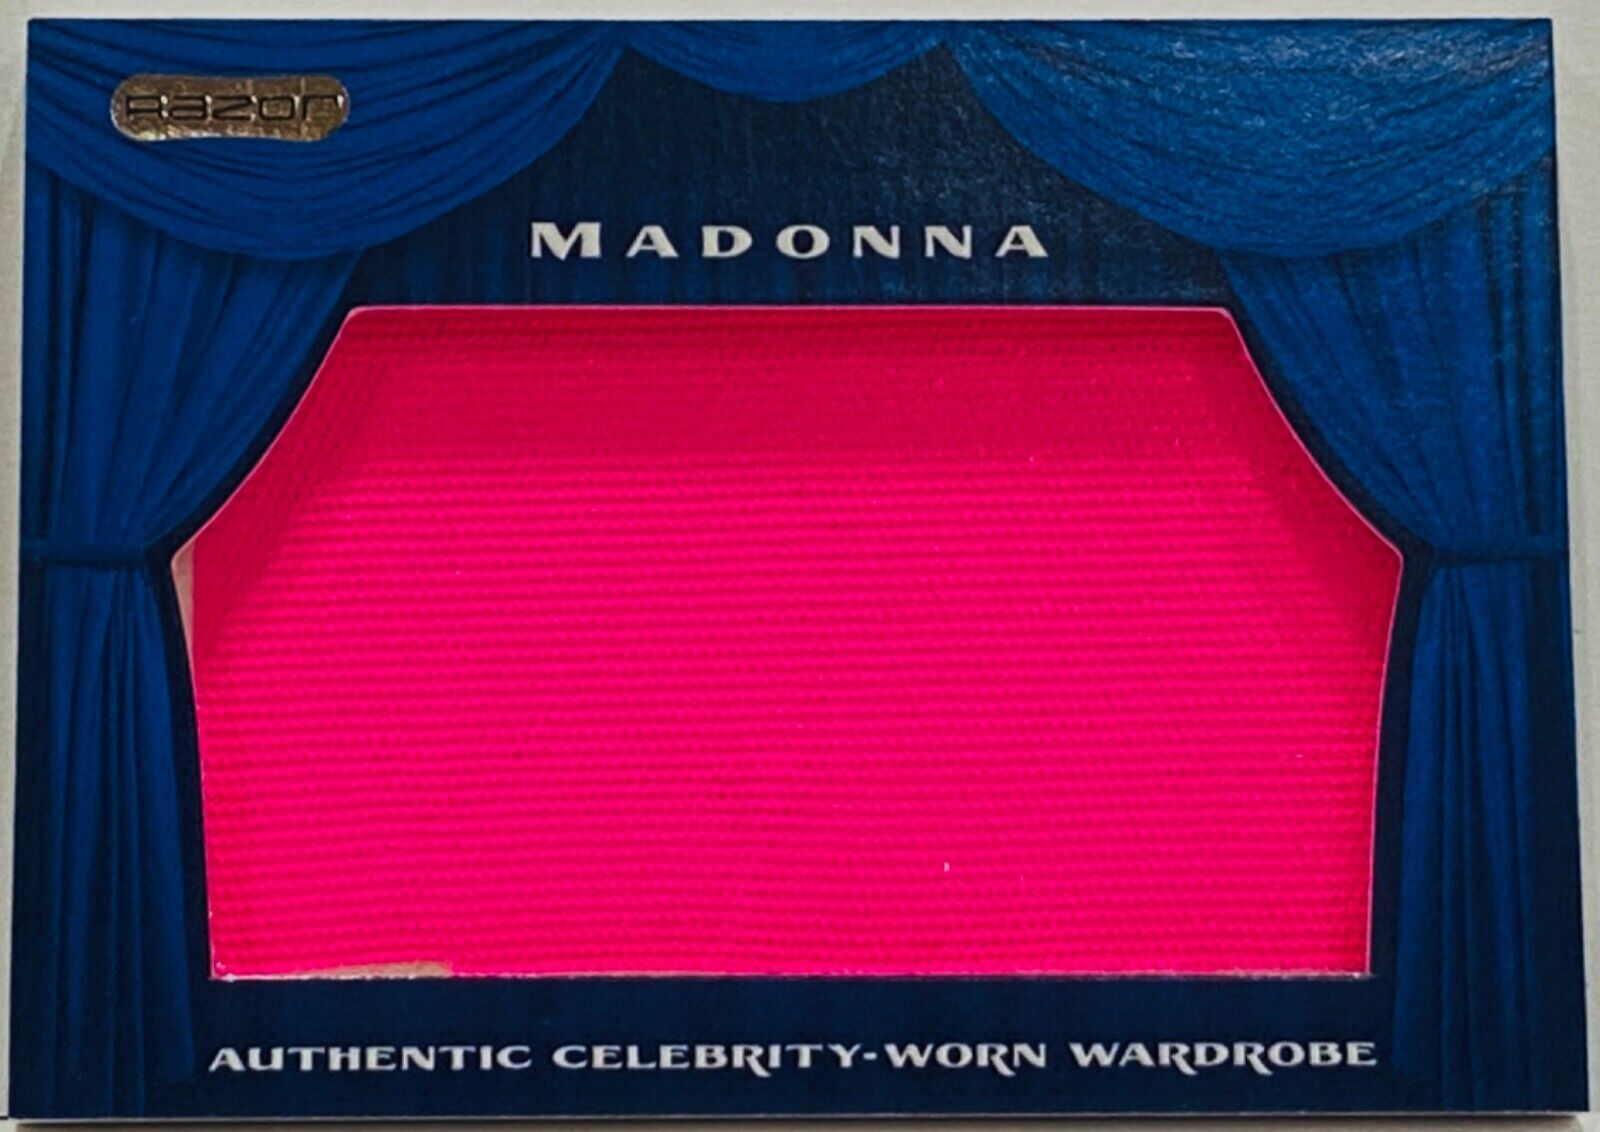 2010 Razor Pop Century Authentic Celebrity-Worn Wardrobe Card SW-40 - Madonna